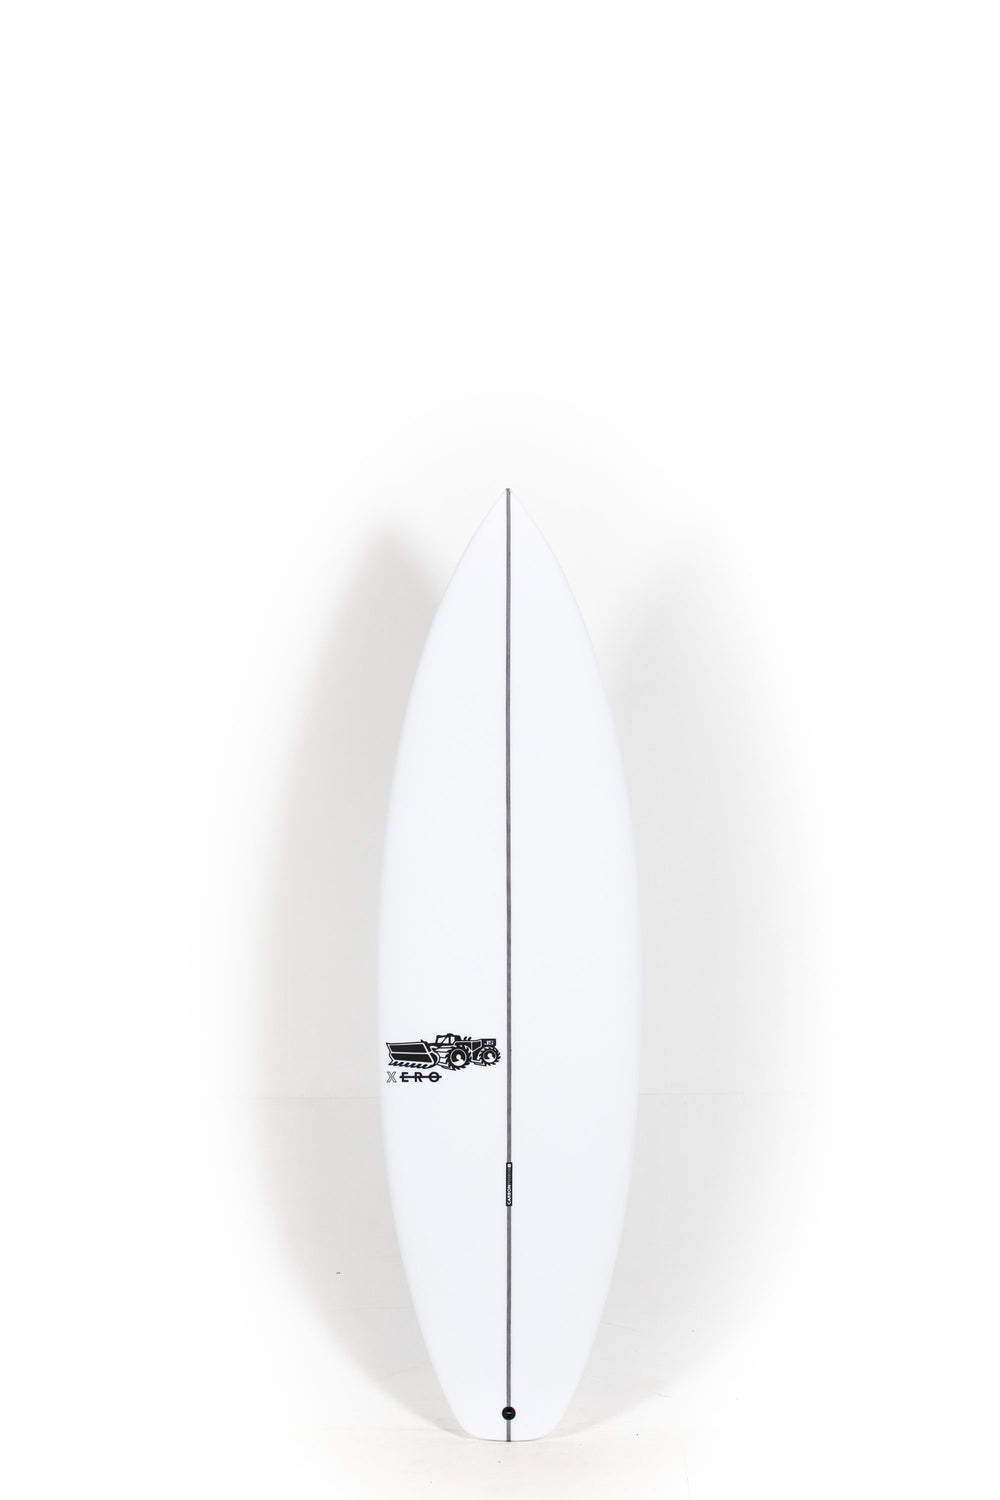 Pukas Surf Shop - JS Surfboards - XERO - 6'0